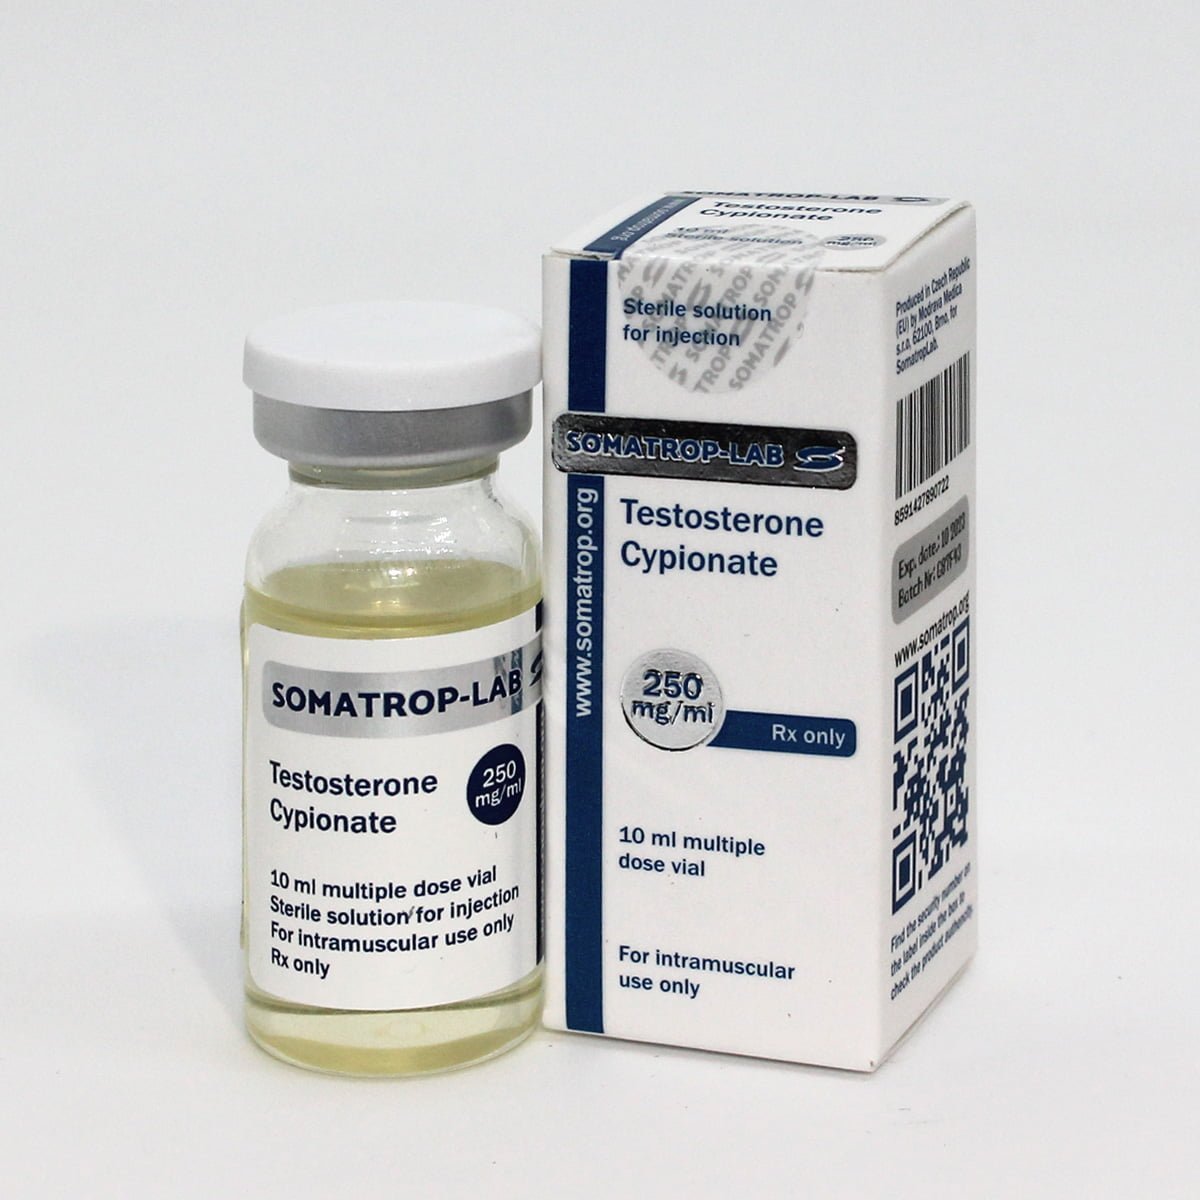 Somatrop-Lab Testosterone Cypionate